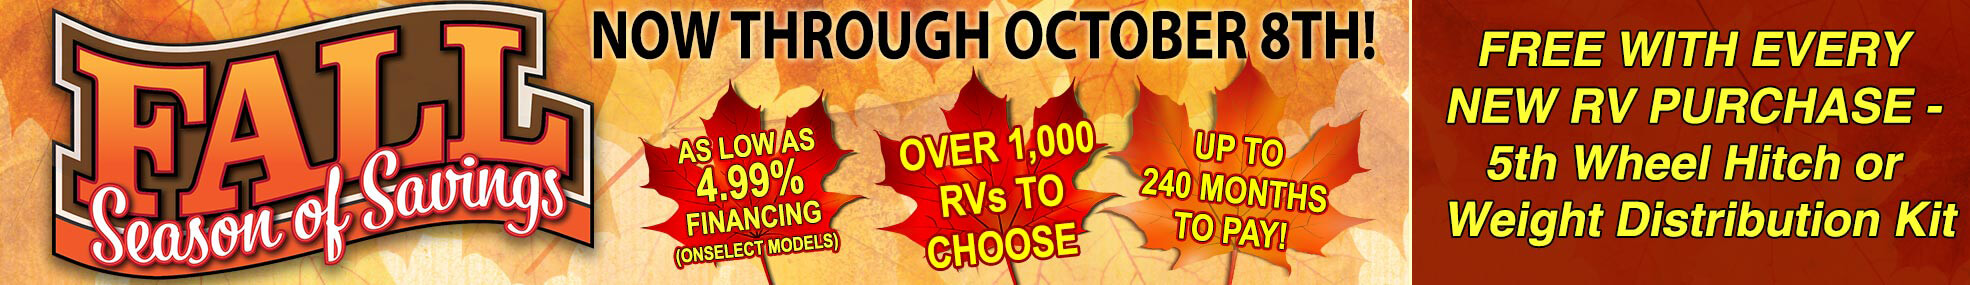 Wilkins RV Fall RV Sale Free RV Hitch